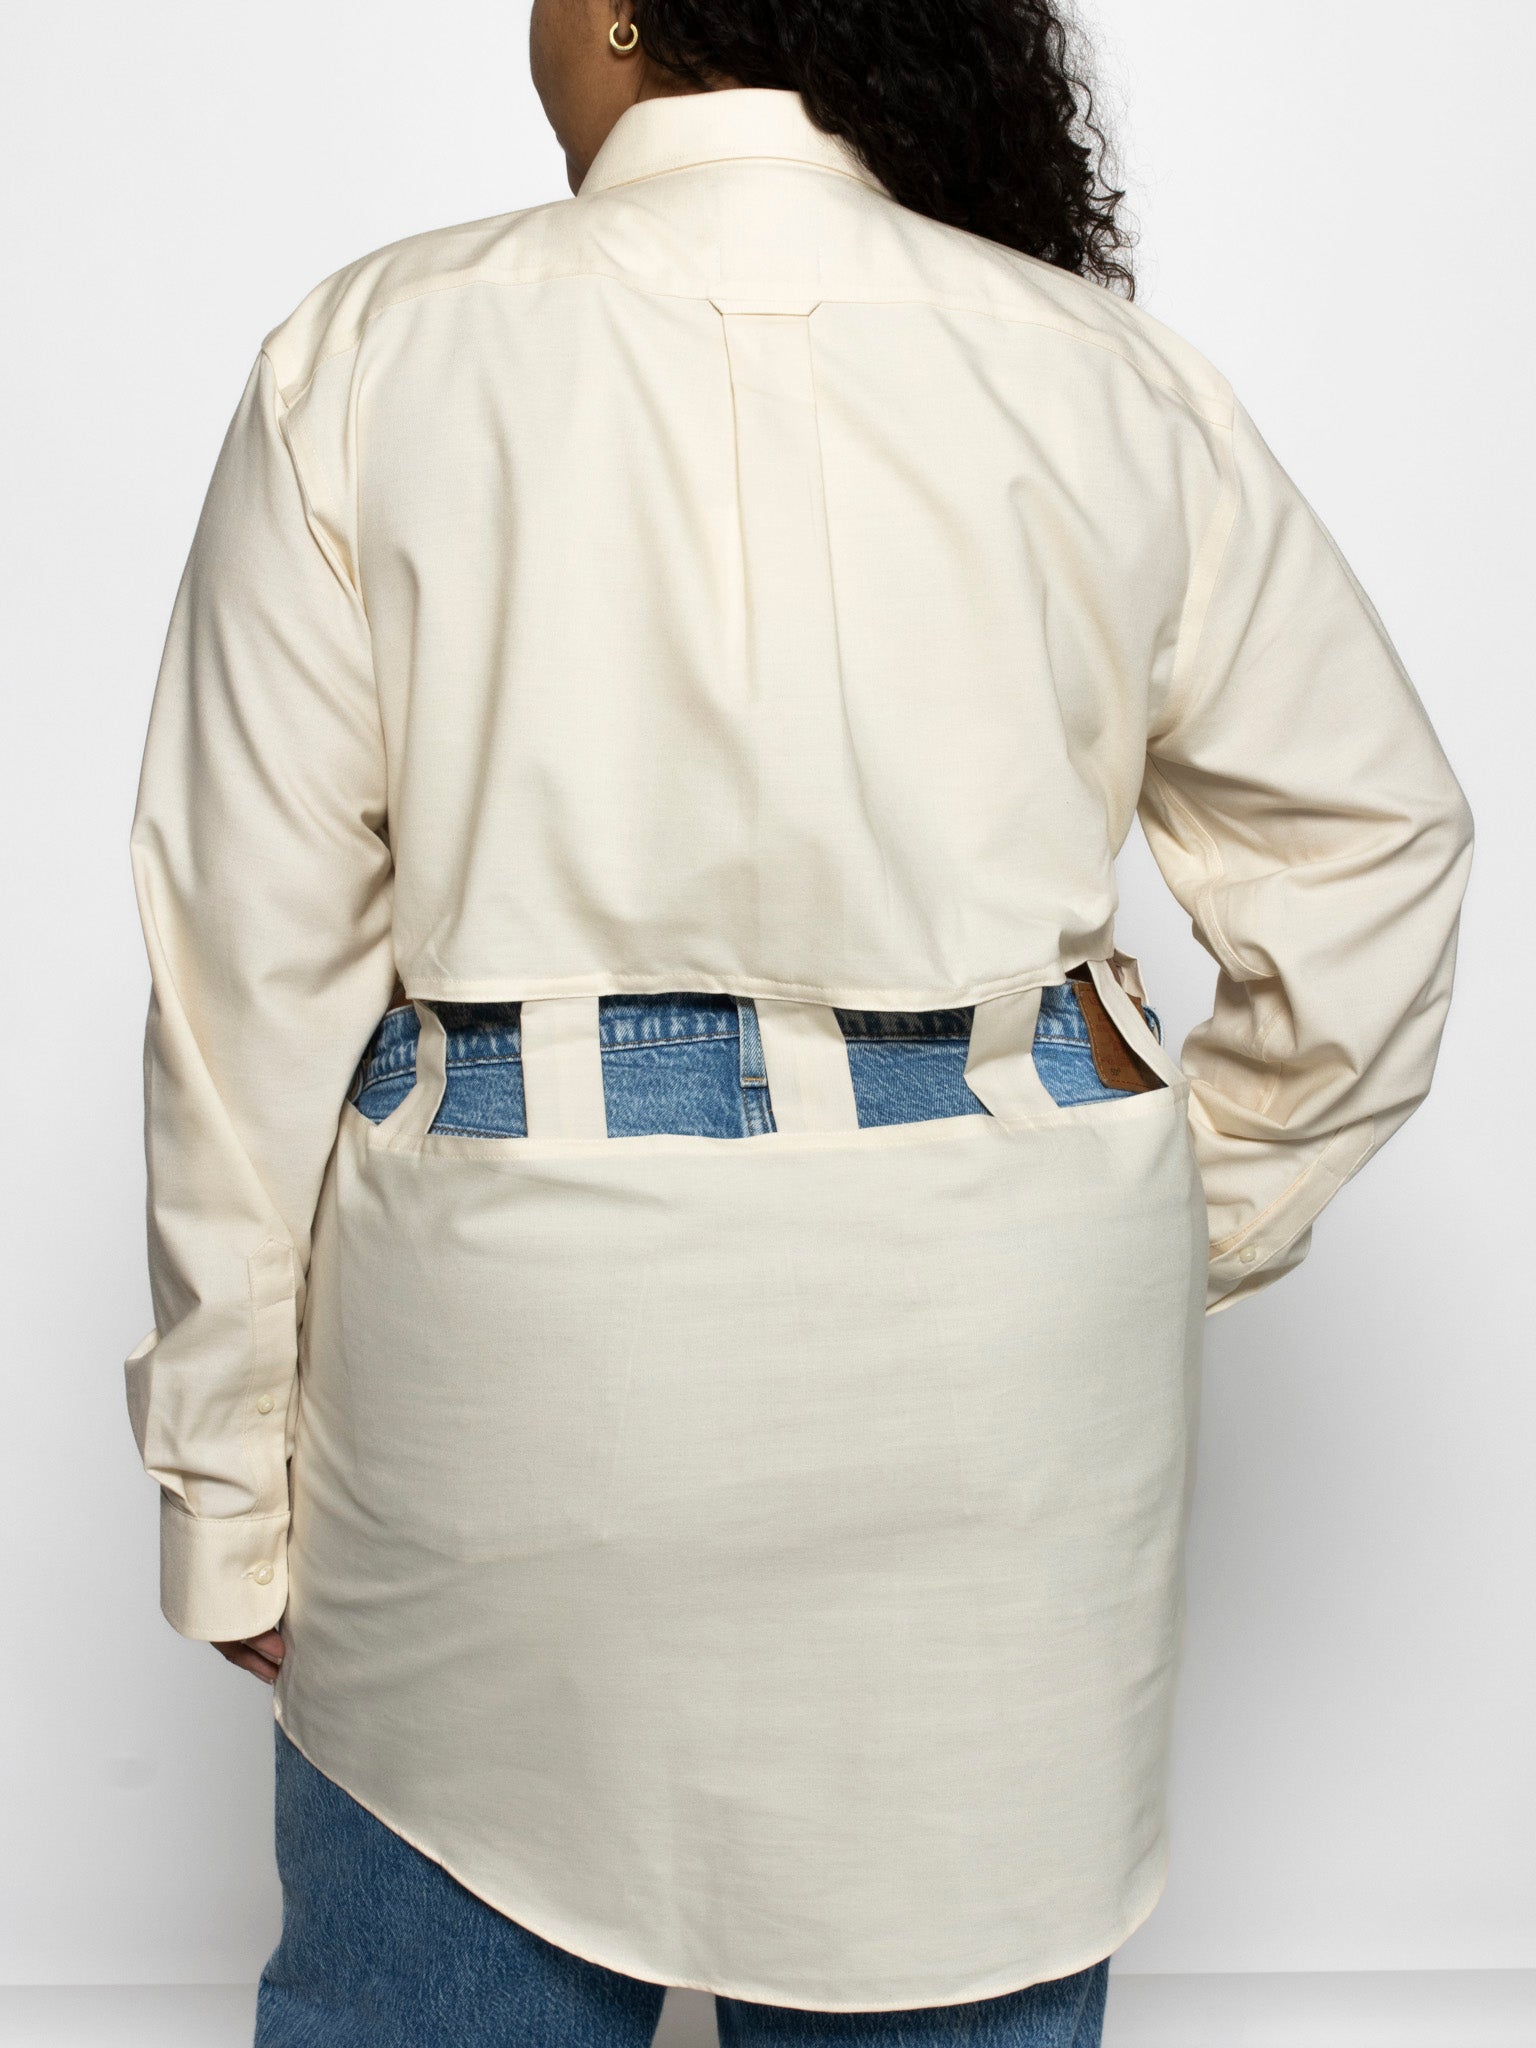 Laurs Kemp x BRZ - Bella Lattice Shirt (2X)